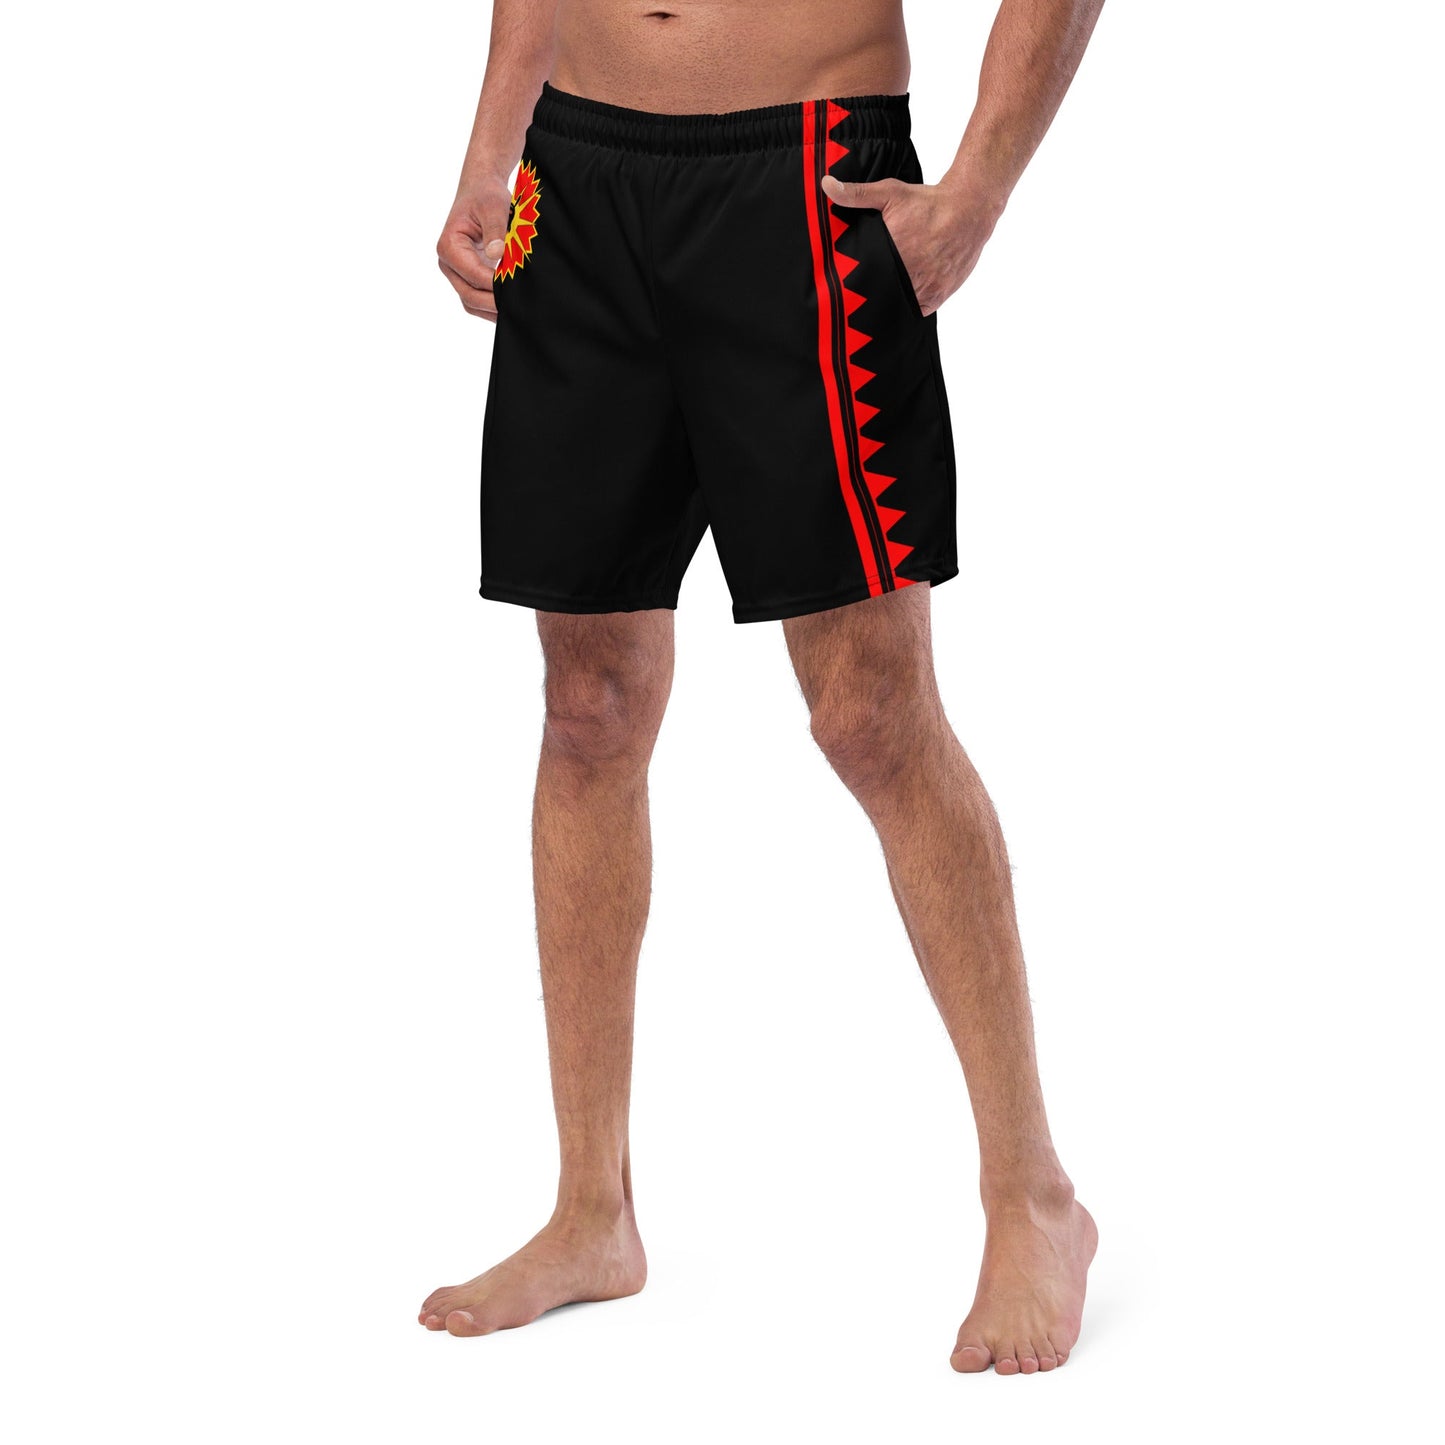 Men's Native Warrior swim trunks - Nikikw Designs